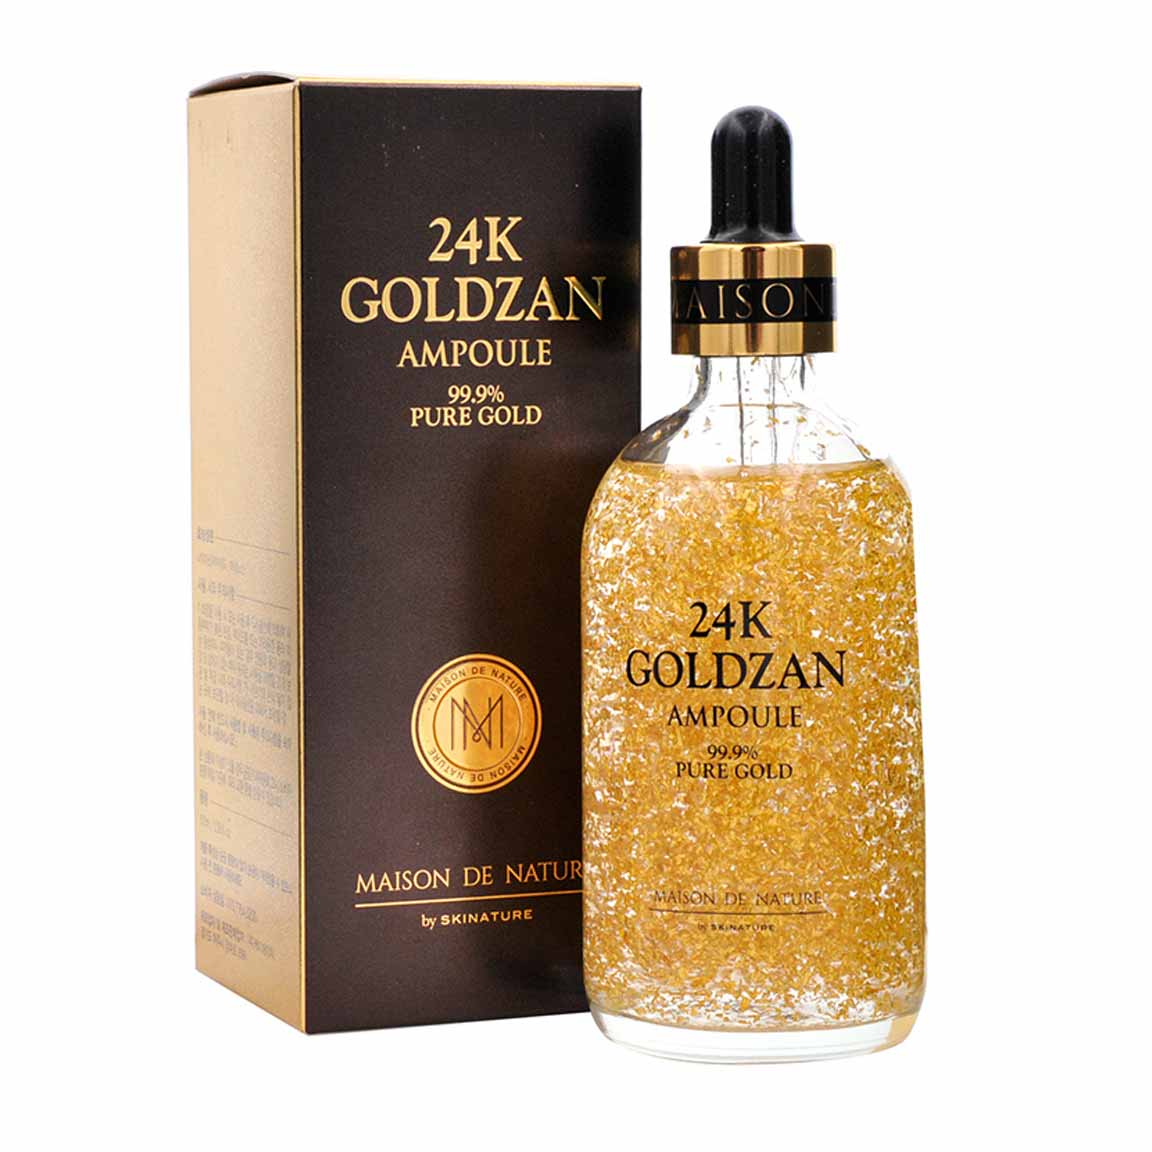 Image of 24k Goldzan Ampoule Pure Gold Face Serum 30ml